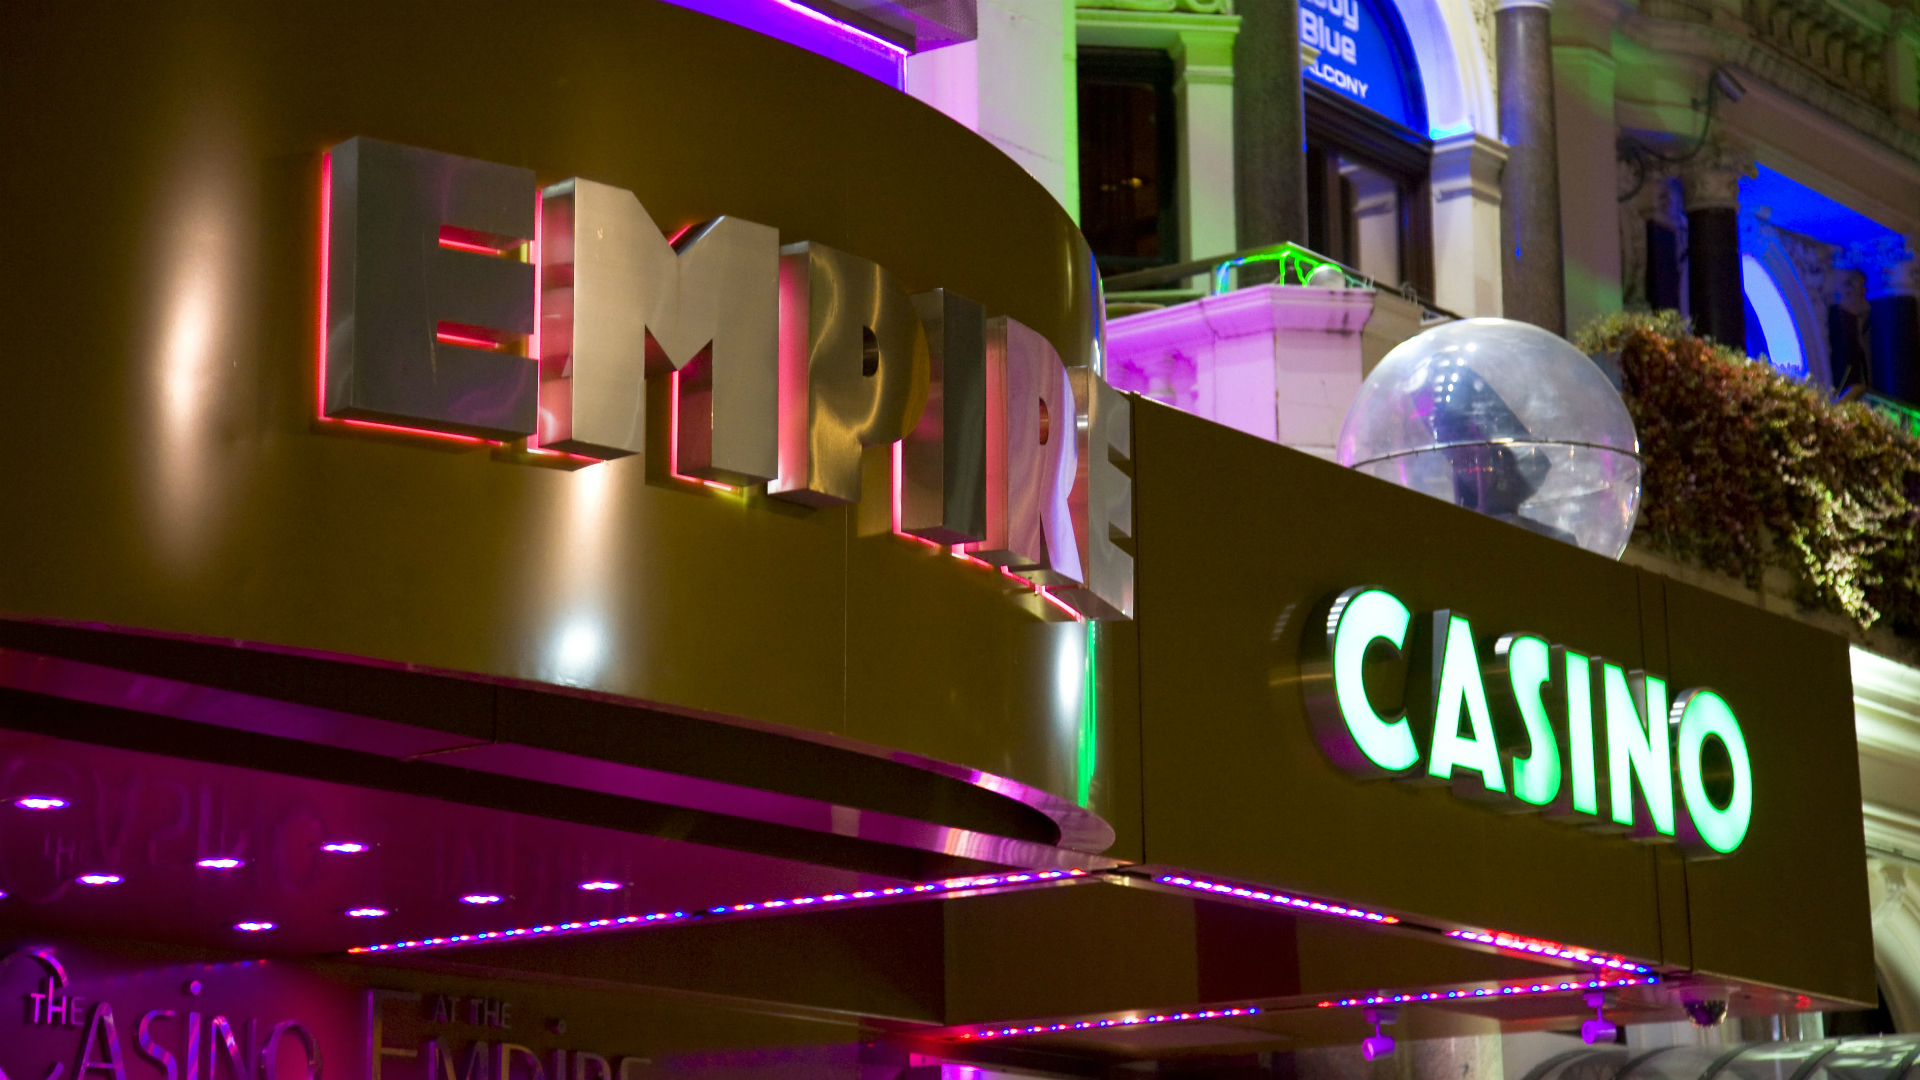 Top 10 casinos in London - Nightlife - visitlondon.com